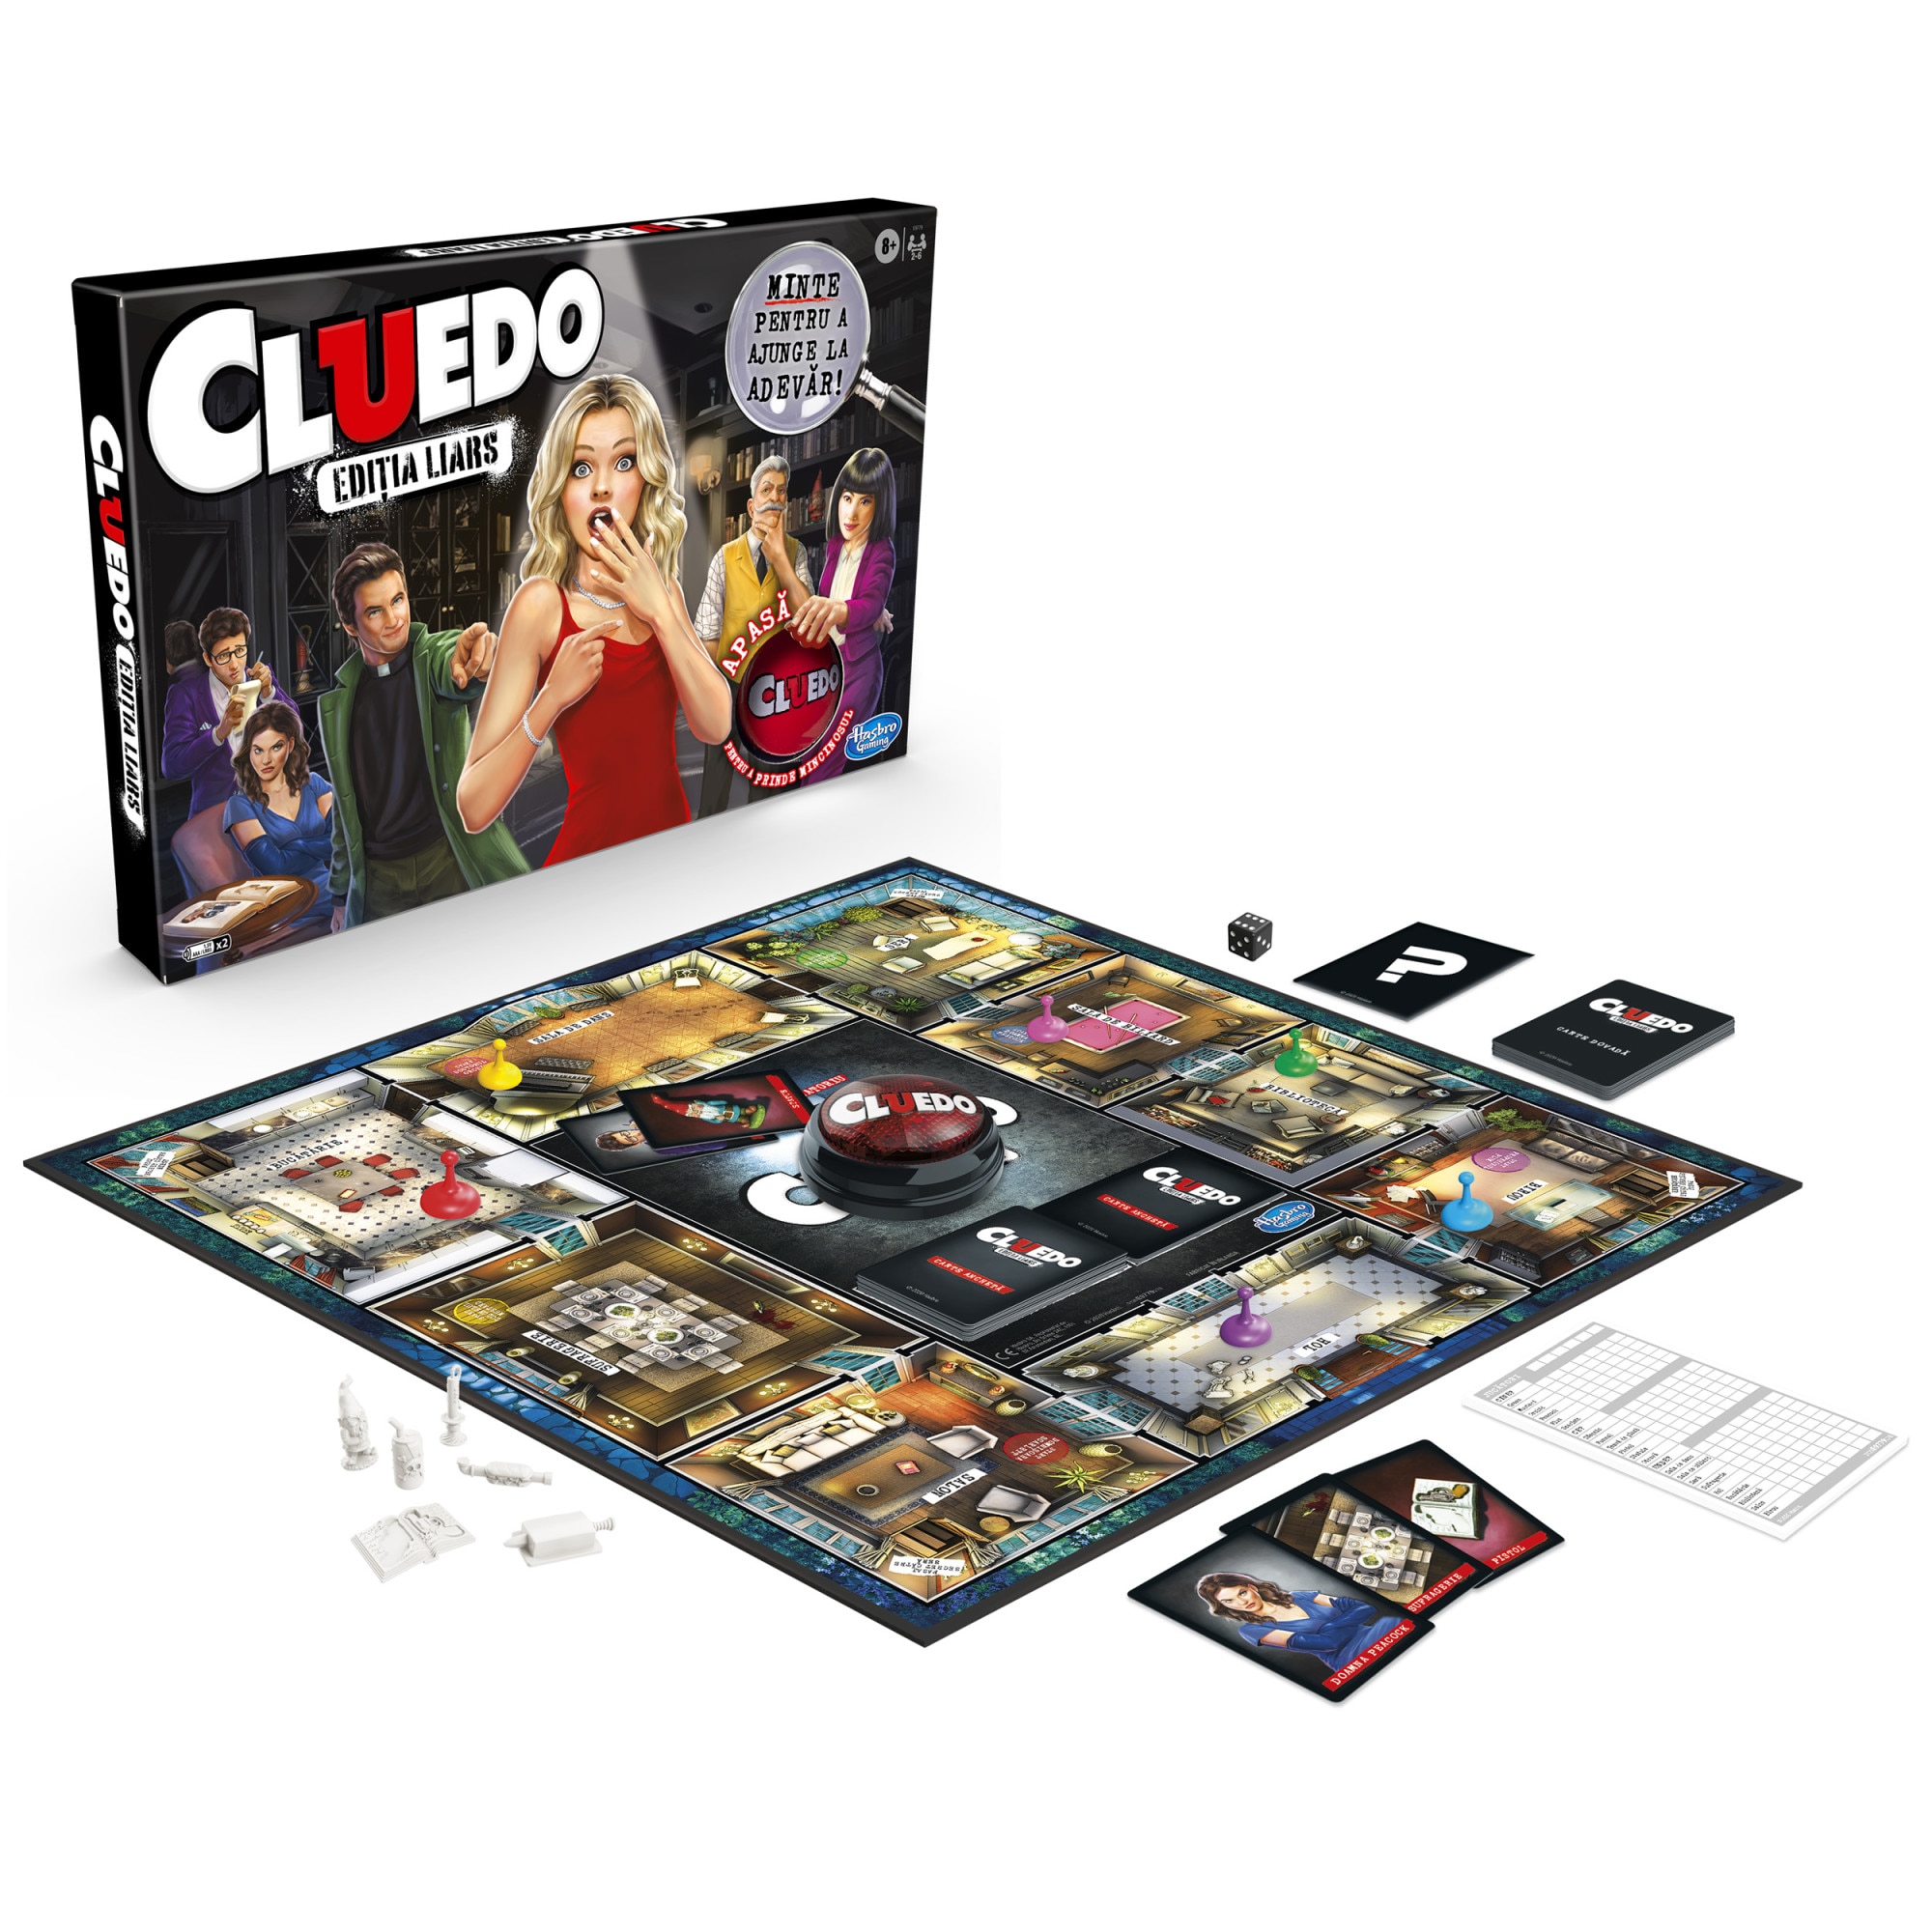 Joc - Cluedo - Editia Liars | Hasbro - 3